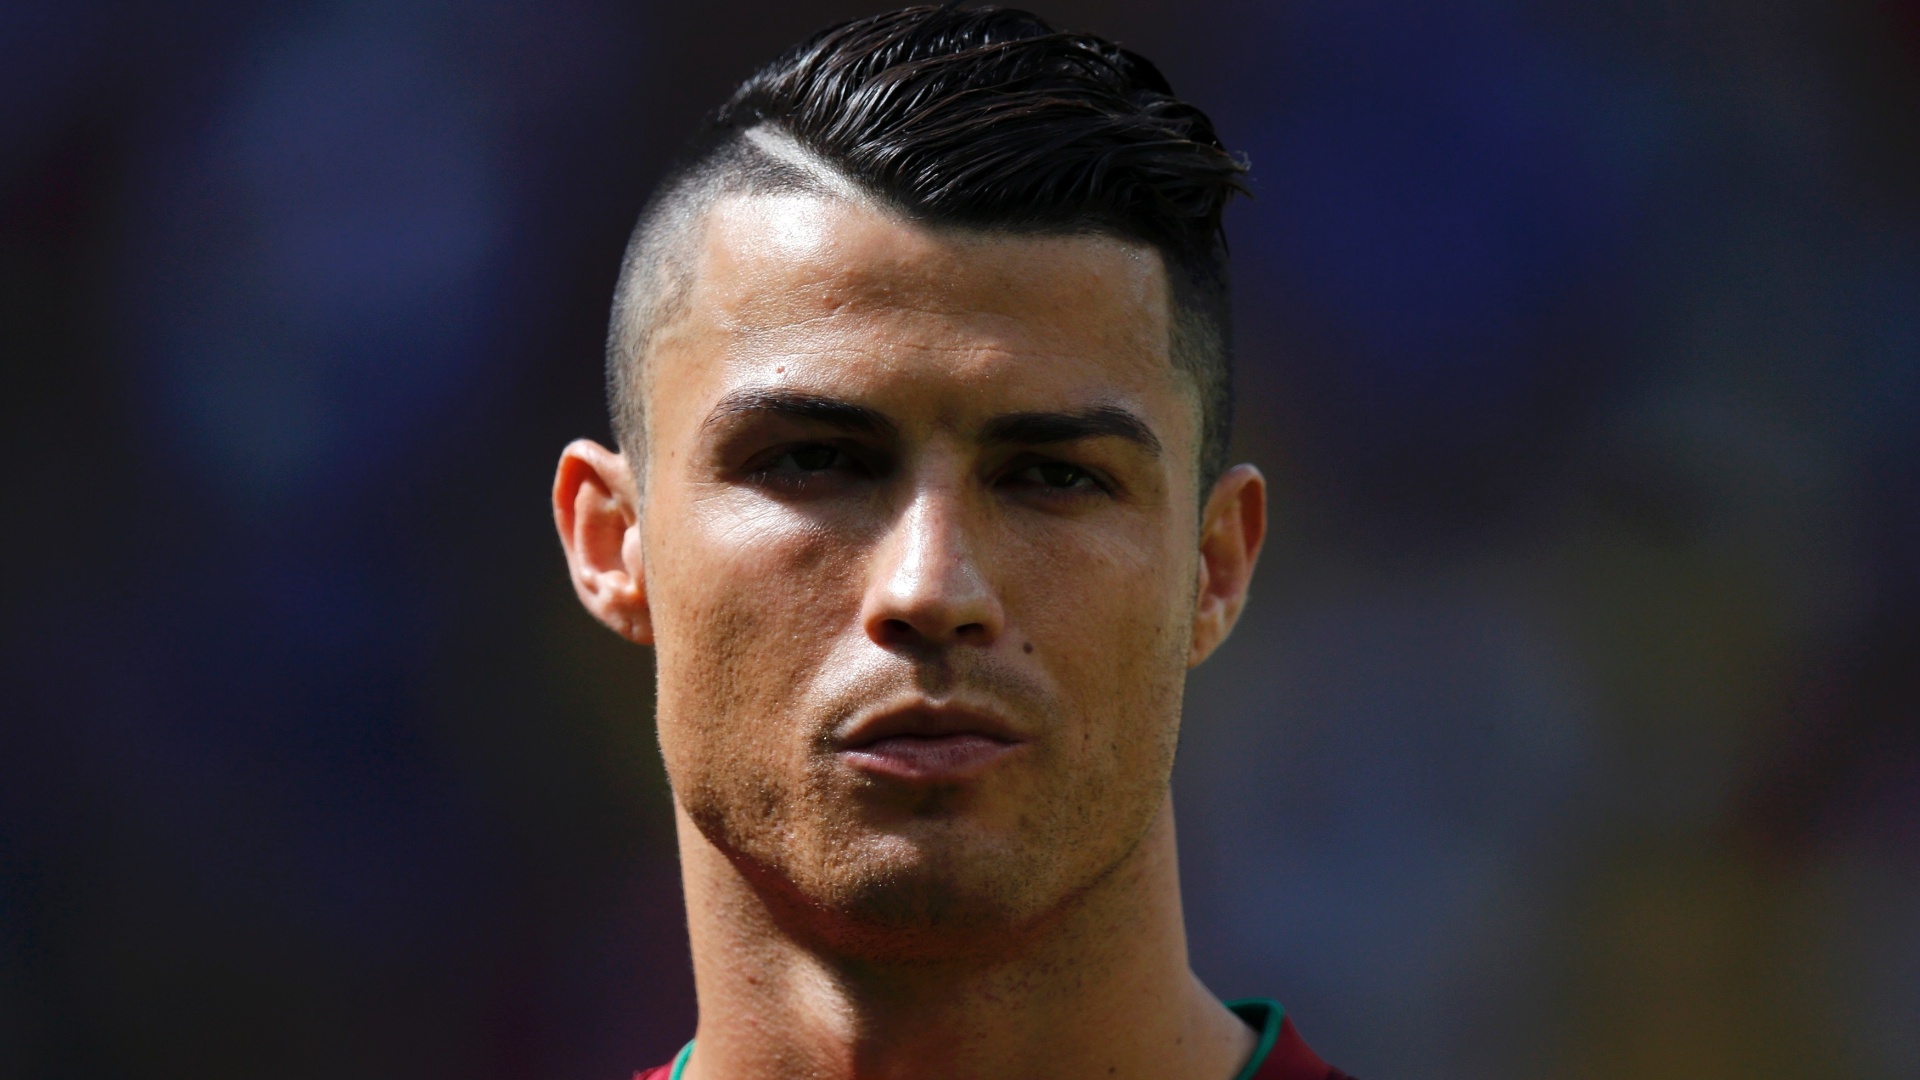 Cristiano Ronaldo 2020 Hairstyle